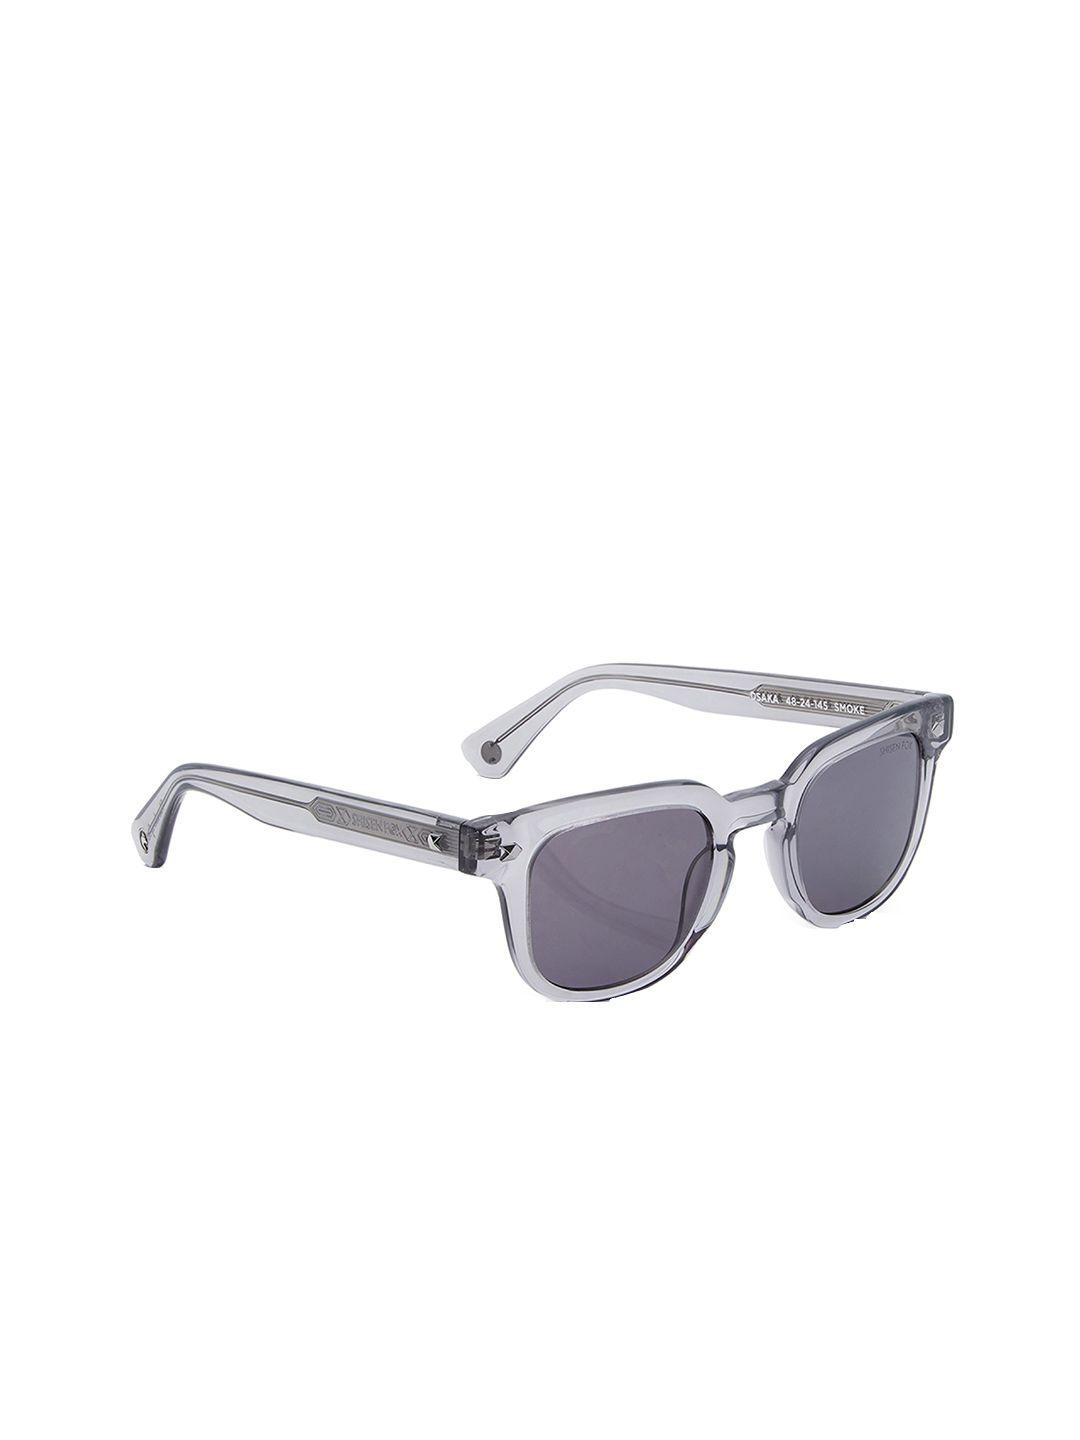 shisen fox osaka unisex square sunglasses with uv protected lens sg059